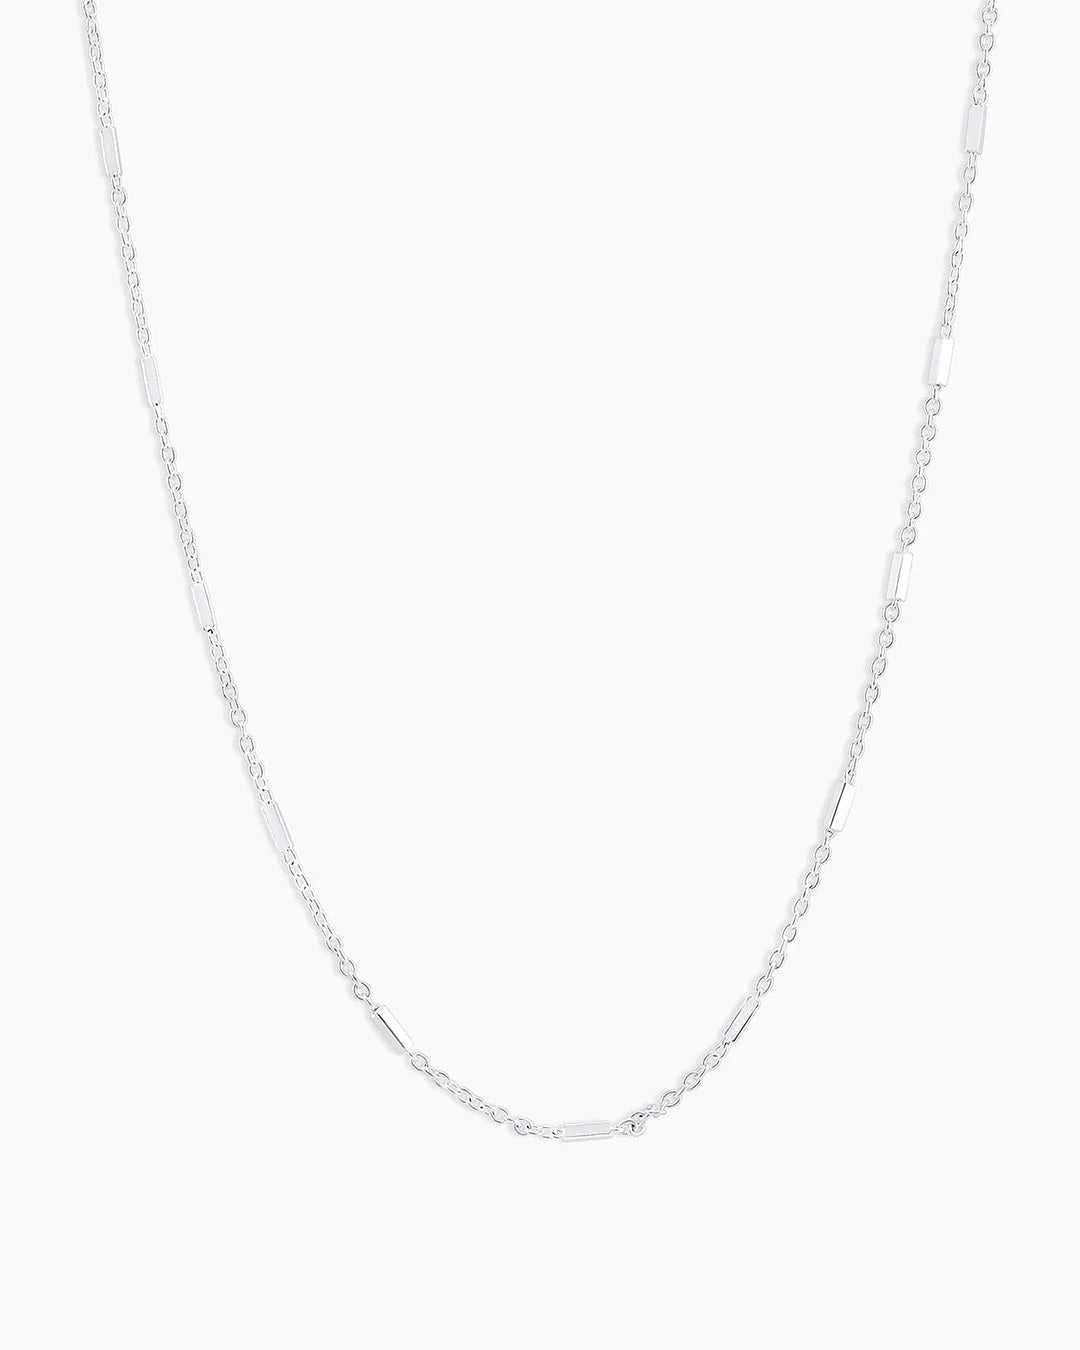 Tatum necklace - silver